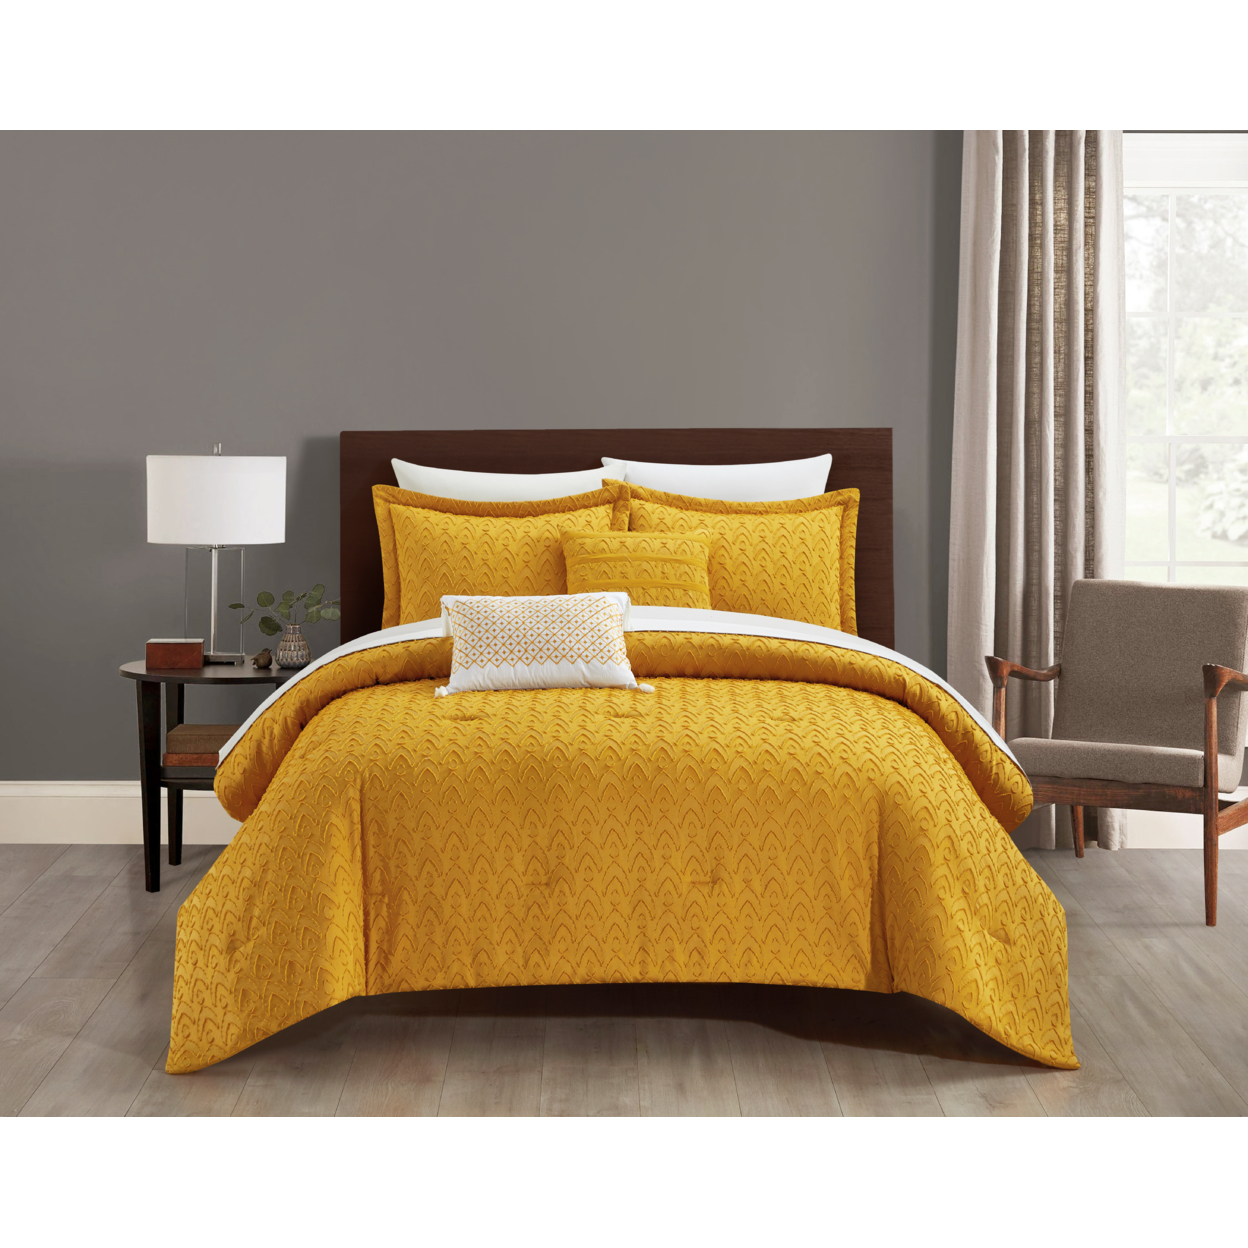 Deign 5 Piece Comforter Set Clip Jacquard Geometric Pattern Design Bedding - Blush, Queen